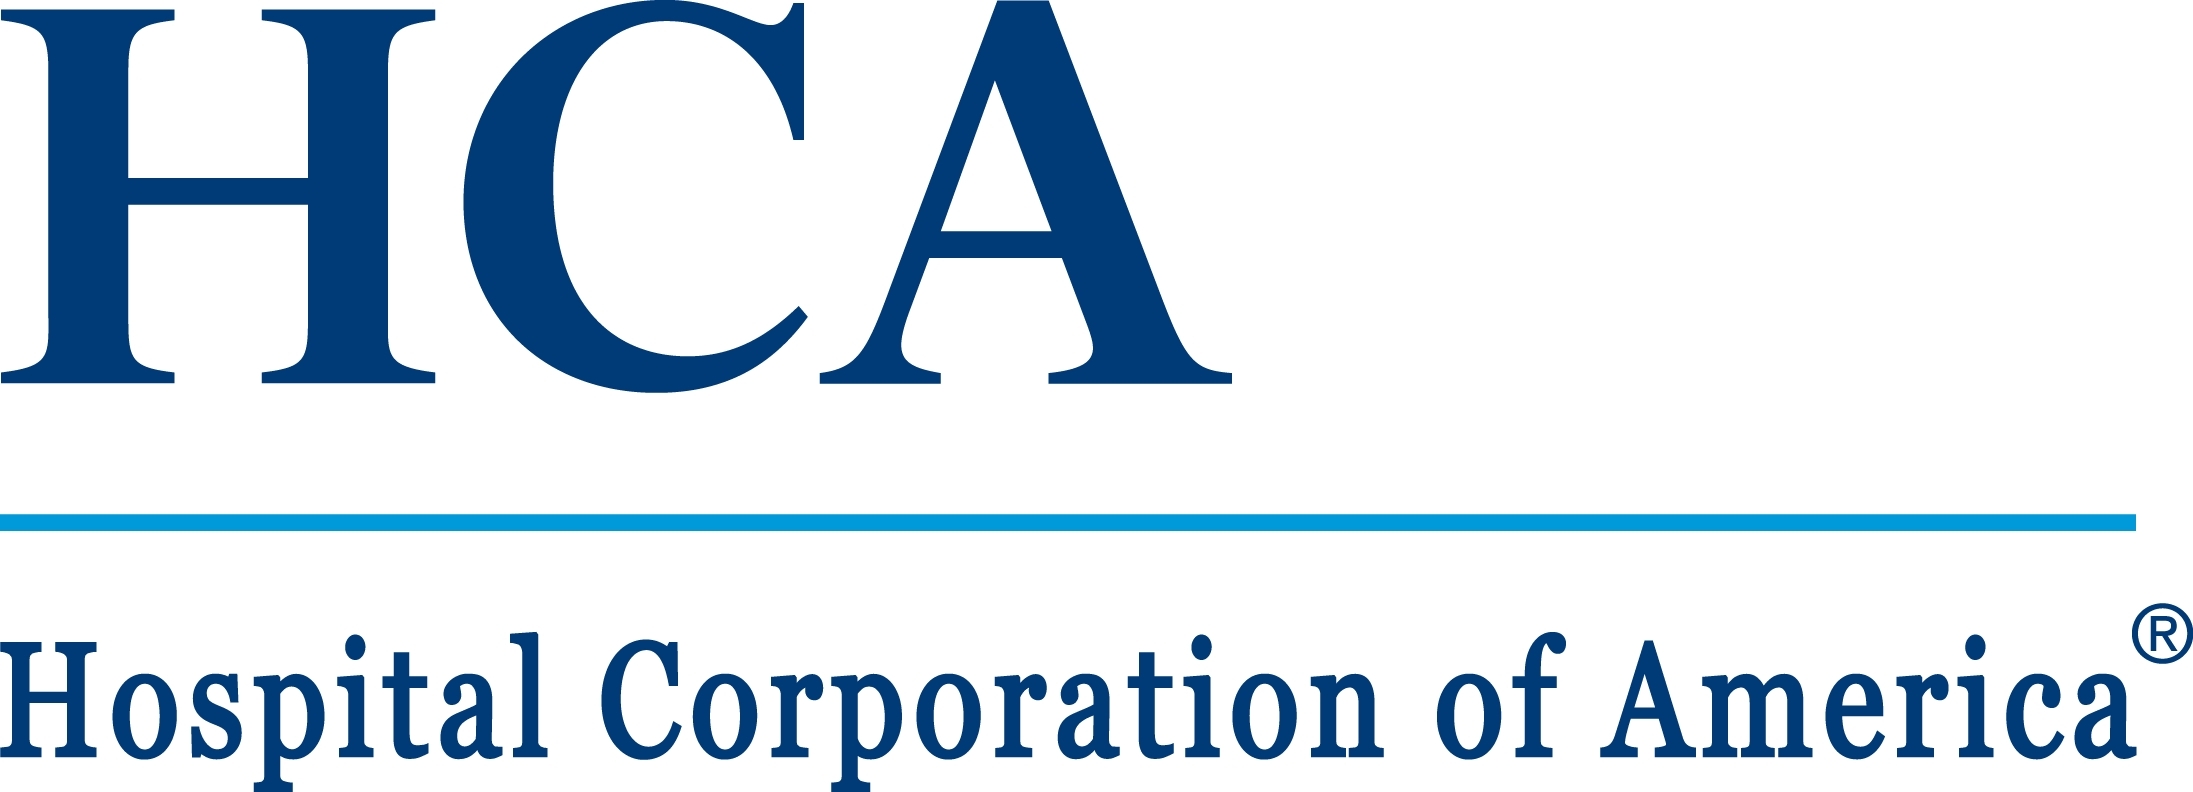 HCA_CorpTag_Logo_4c.jpg